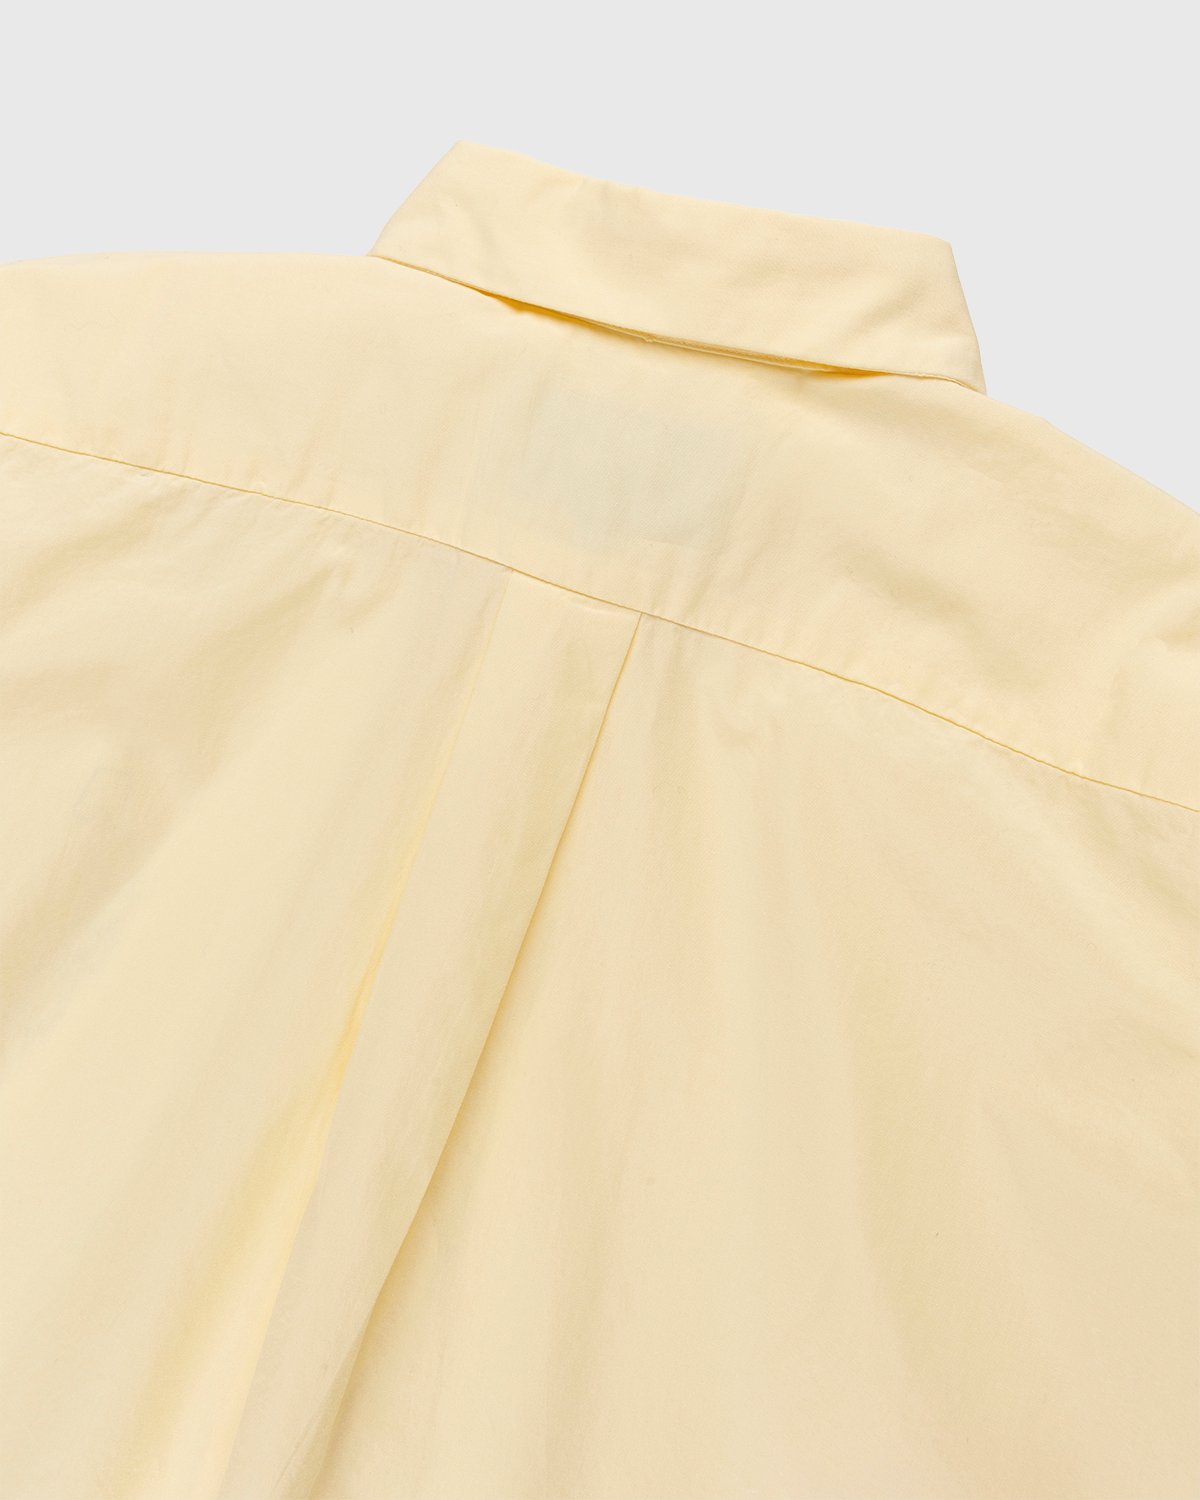 Carne Bollente - Dancing Keen Shirt Butter Yellow - Clothing - Beige - Image 4